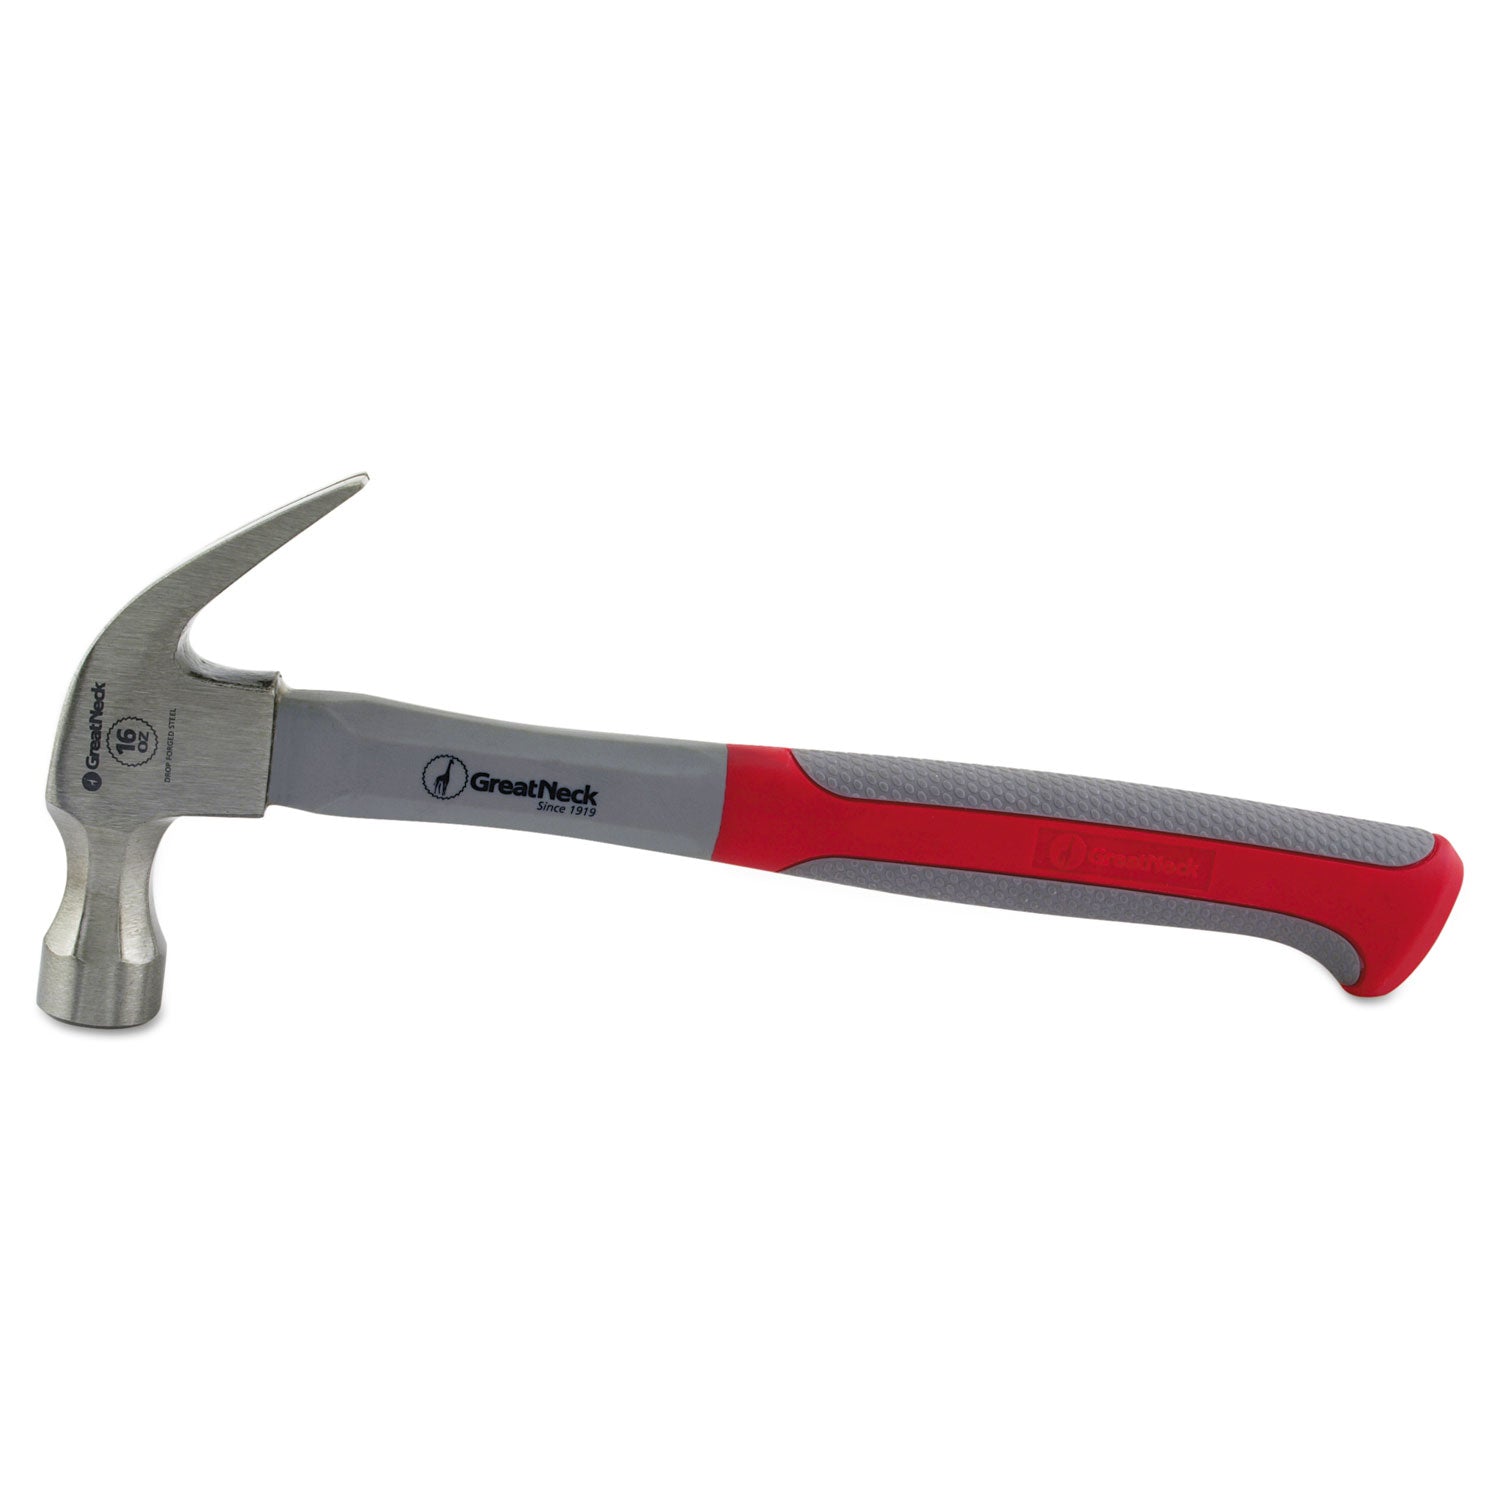 16 oz Claw Hammer with High-Visibility Orange Fiberglass Handle - 